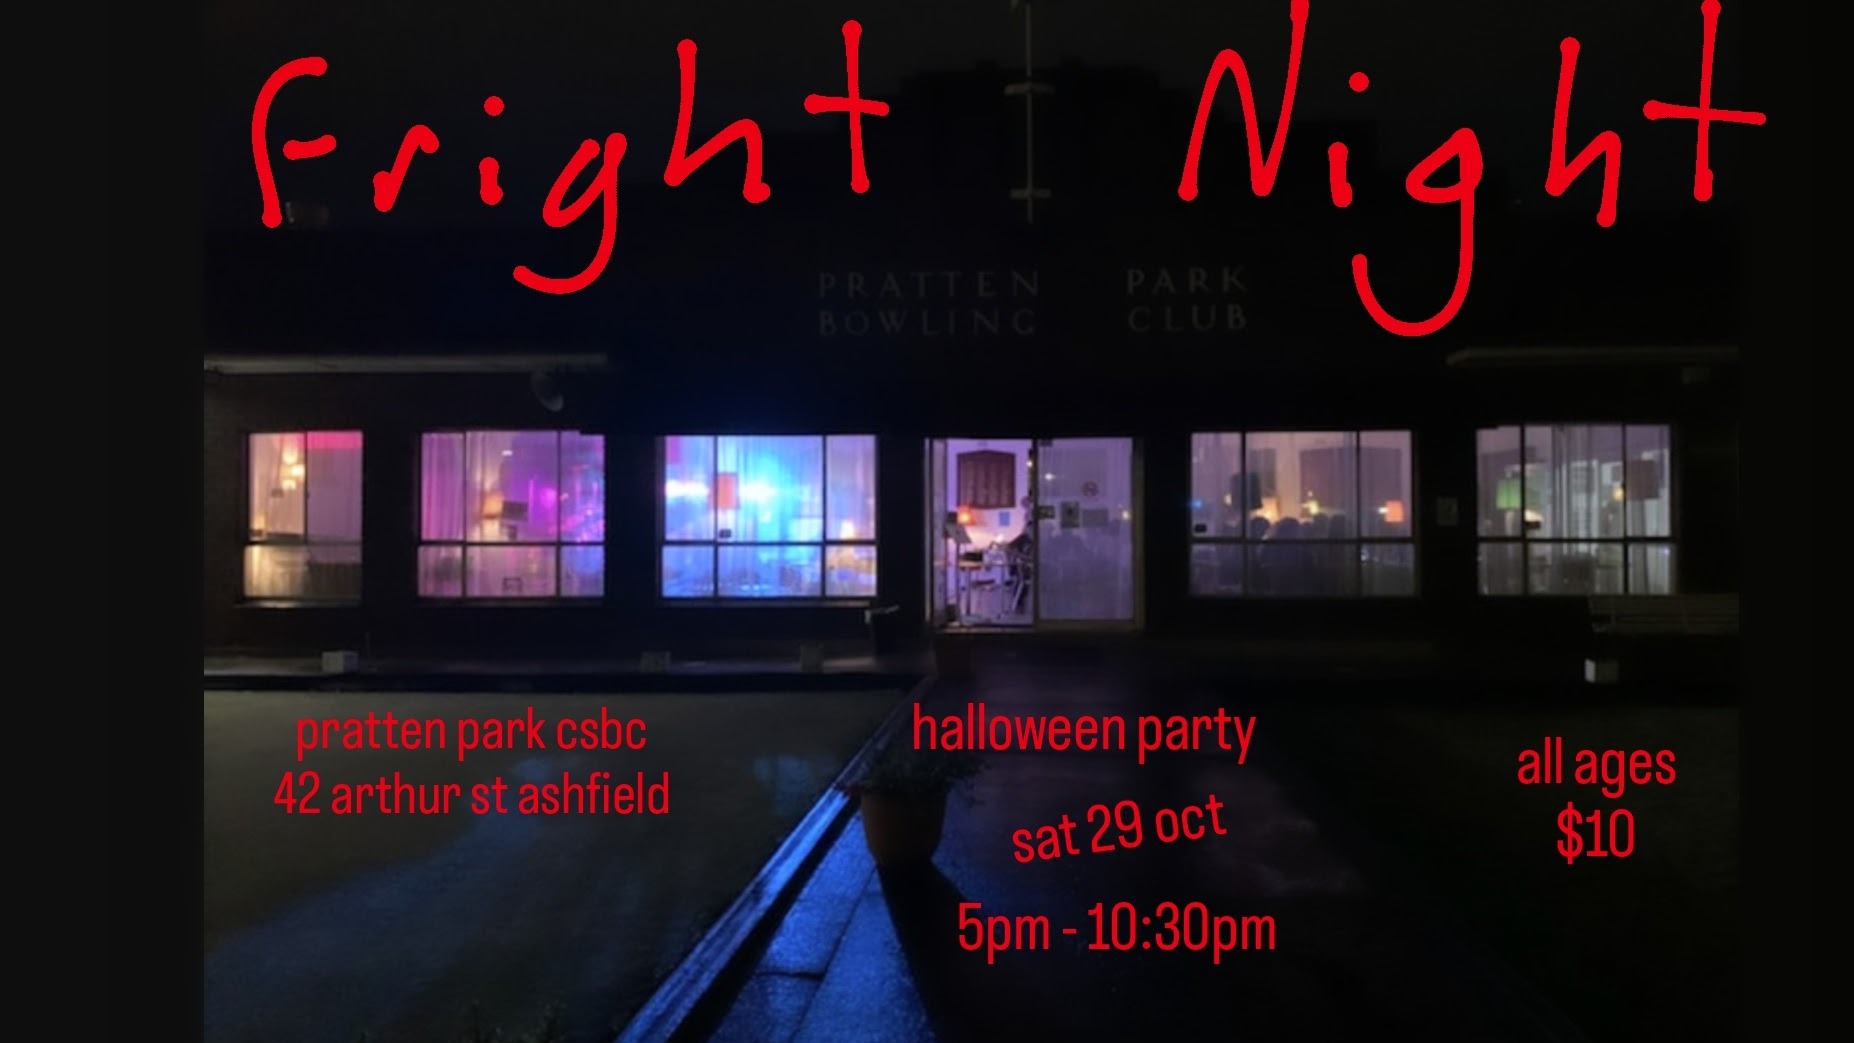 'Fright Night' halloween party by Futureproof Tickets, Pratten Park